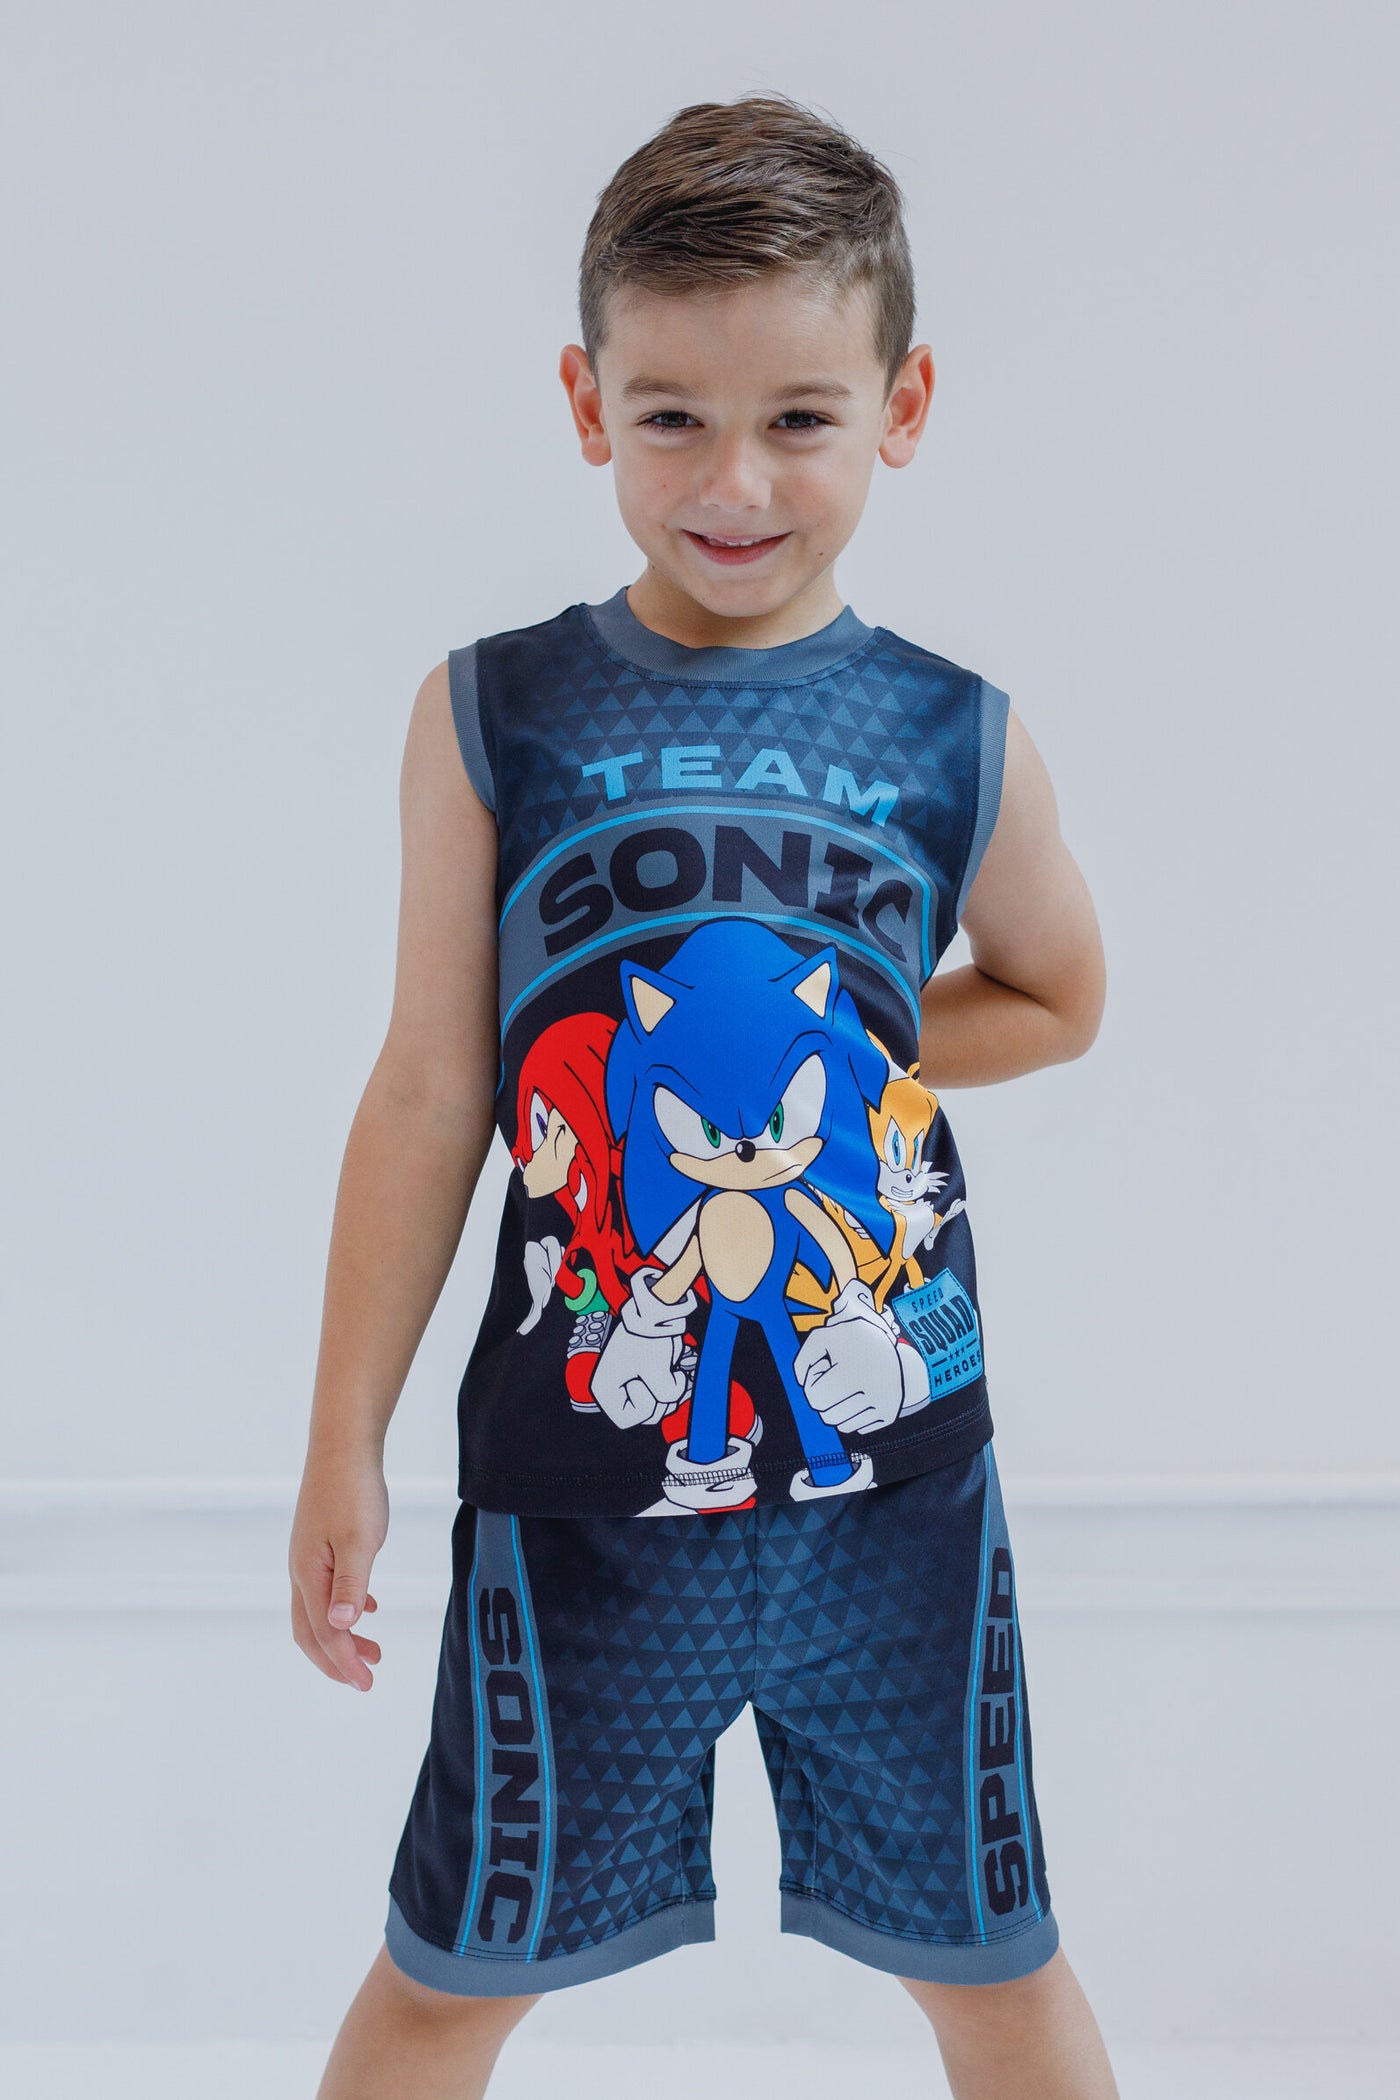 SEGA Sonic the Hedgehog Mesh Tank Top Shirt and Shorts Outfit Set